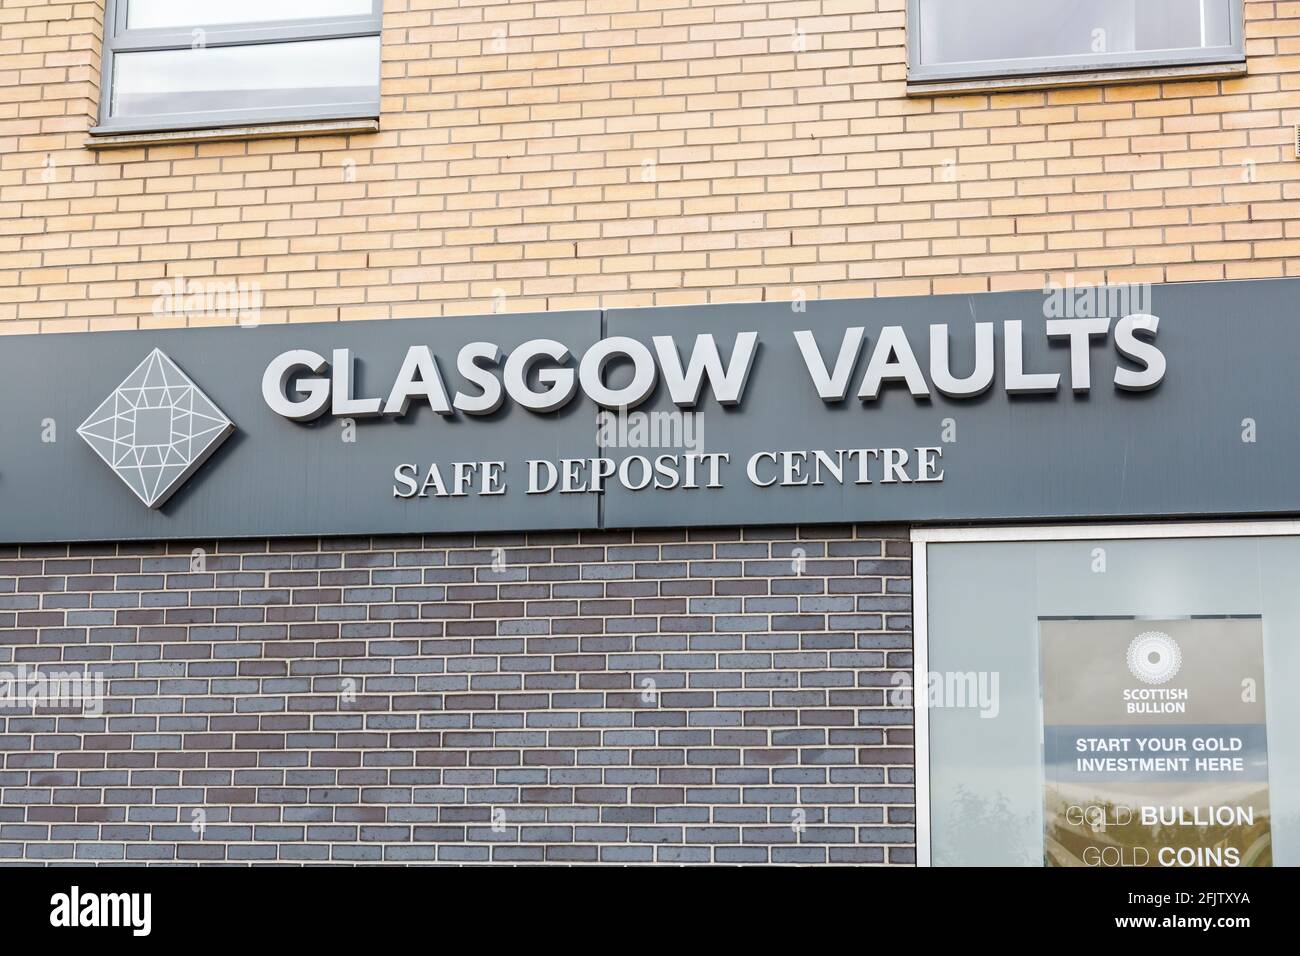 Glasgow Vaults Safe Deposit Centre sign, Glasgow, Scotland, UK Stock Photo  - Alamy